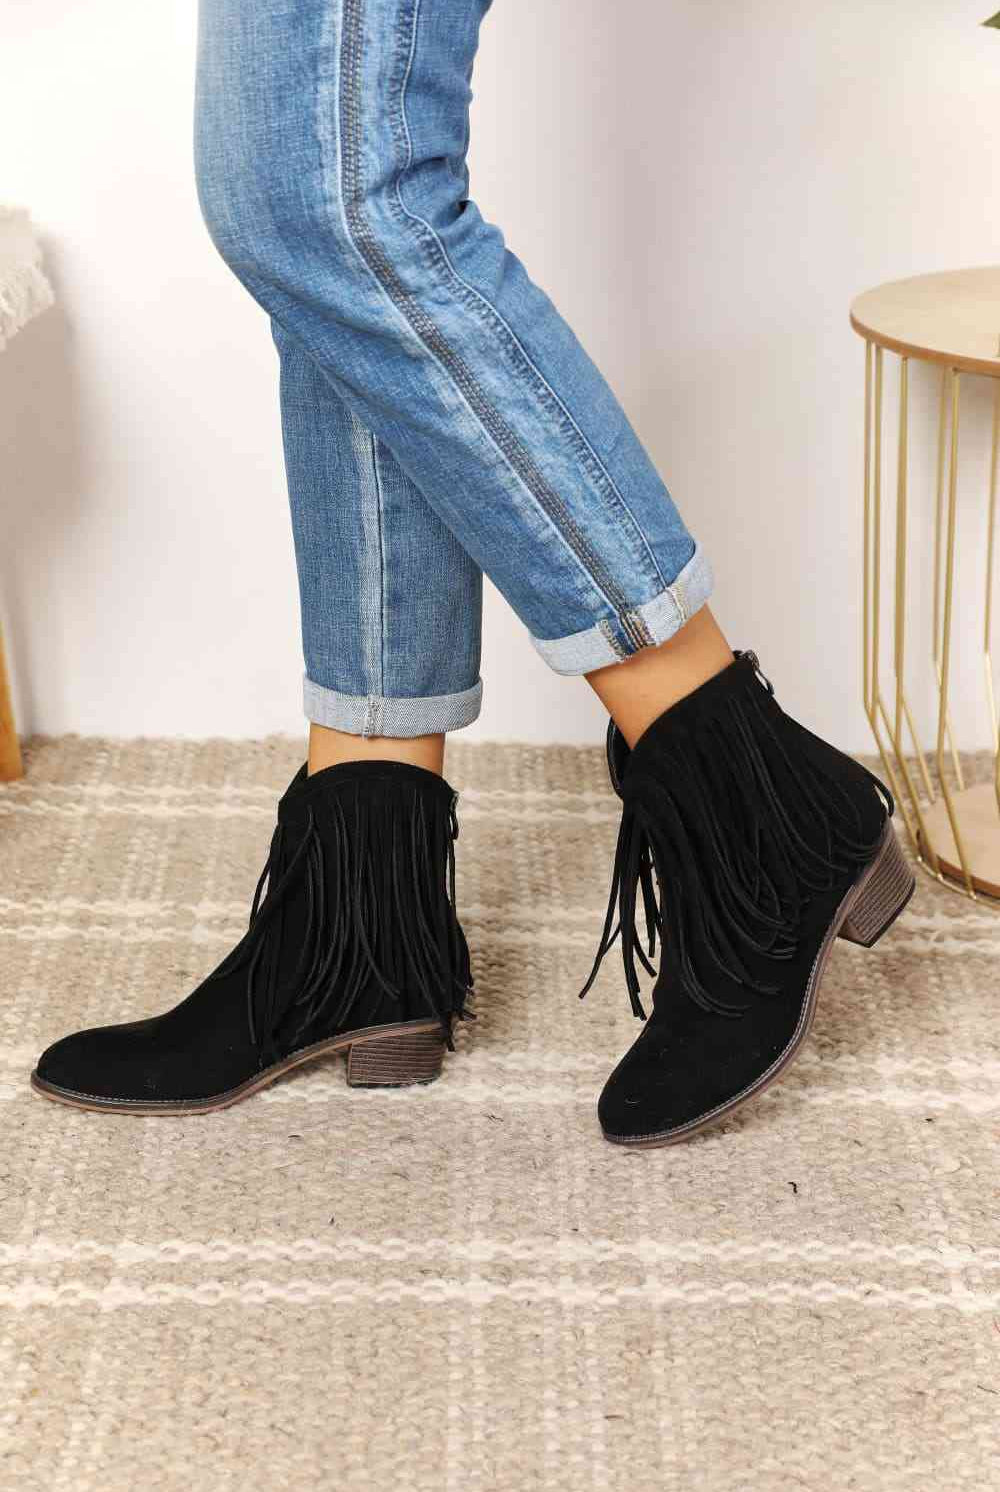 Light Gray Legend Women's Fringe Cowboy Western Ankle Boots Shoes